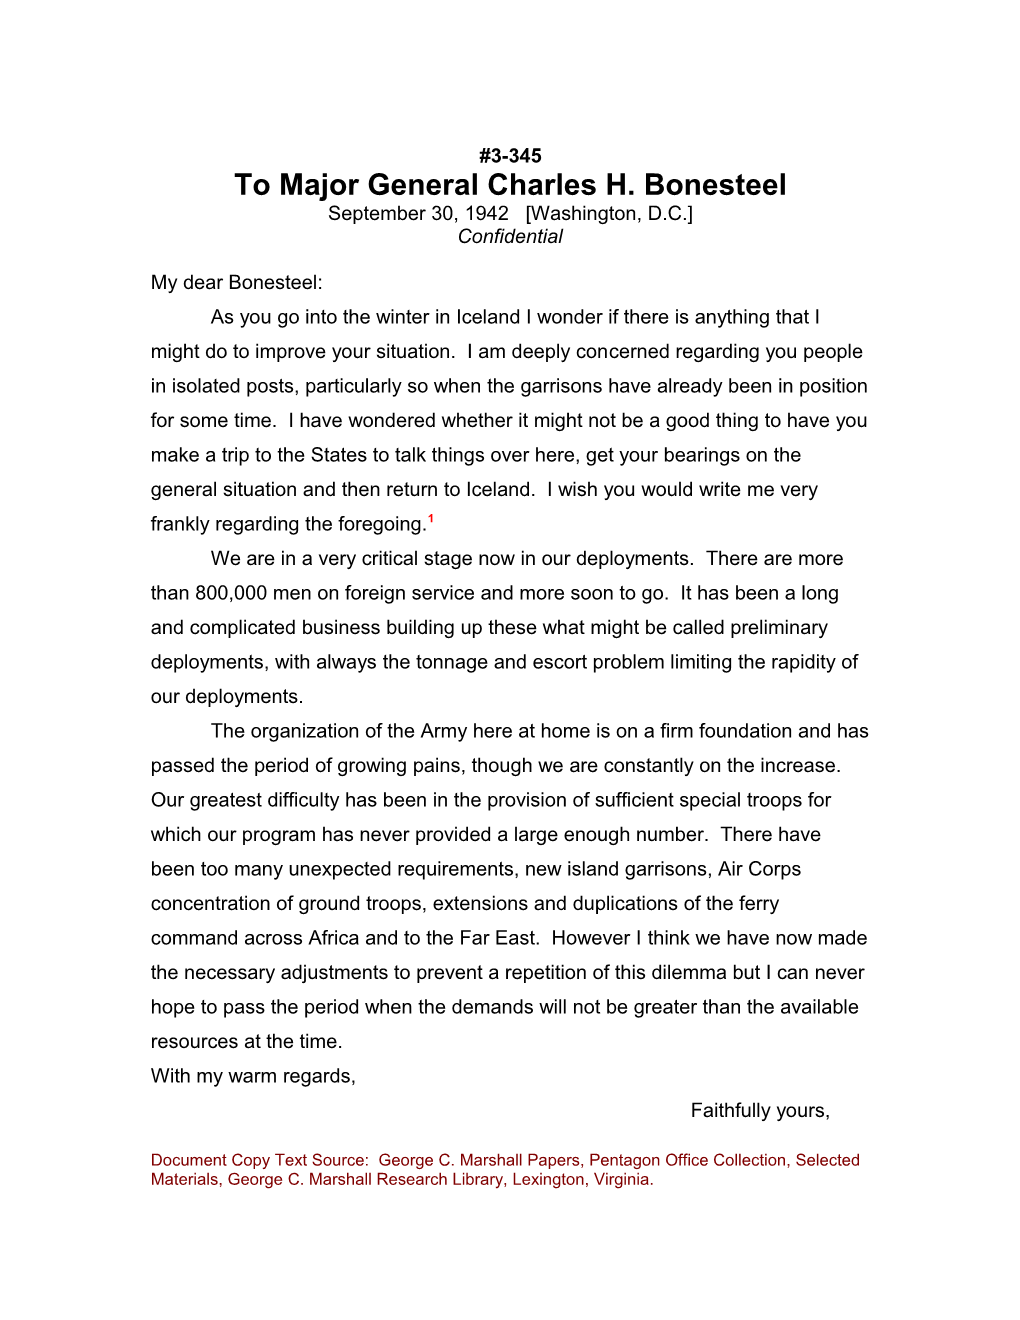 To Major General Charles H. Bonesteel